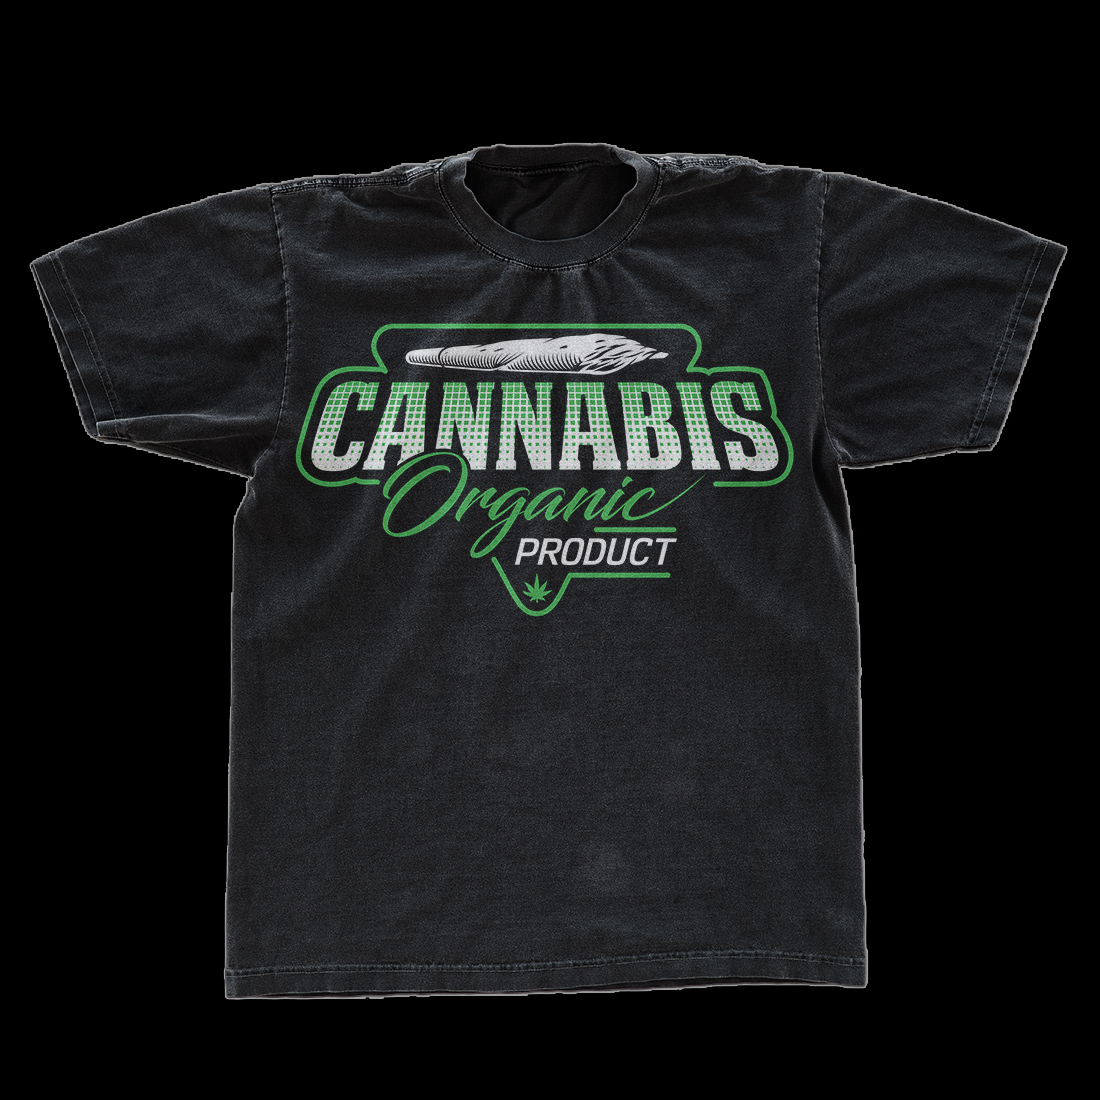 Black shirt that says cannabis organic product.